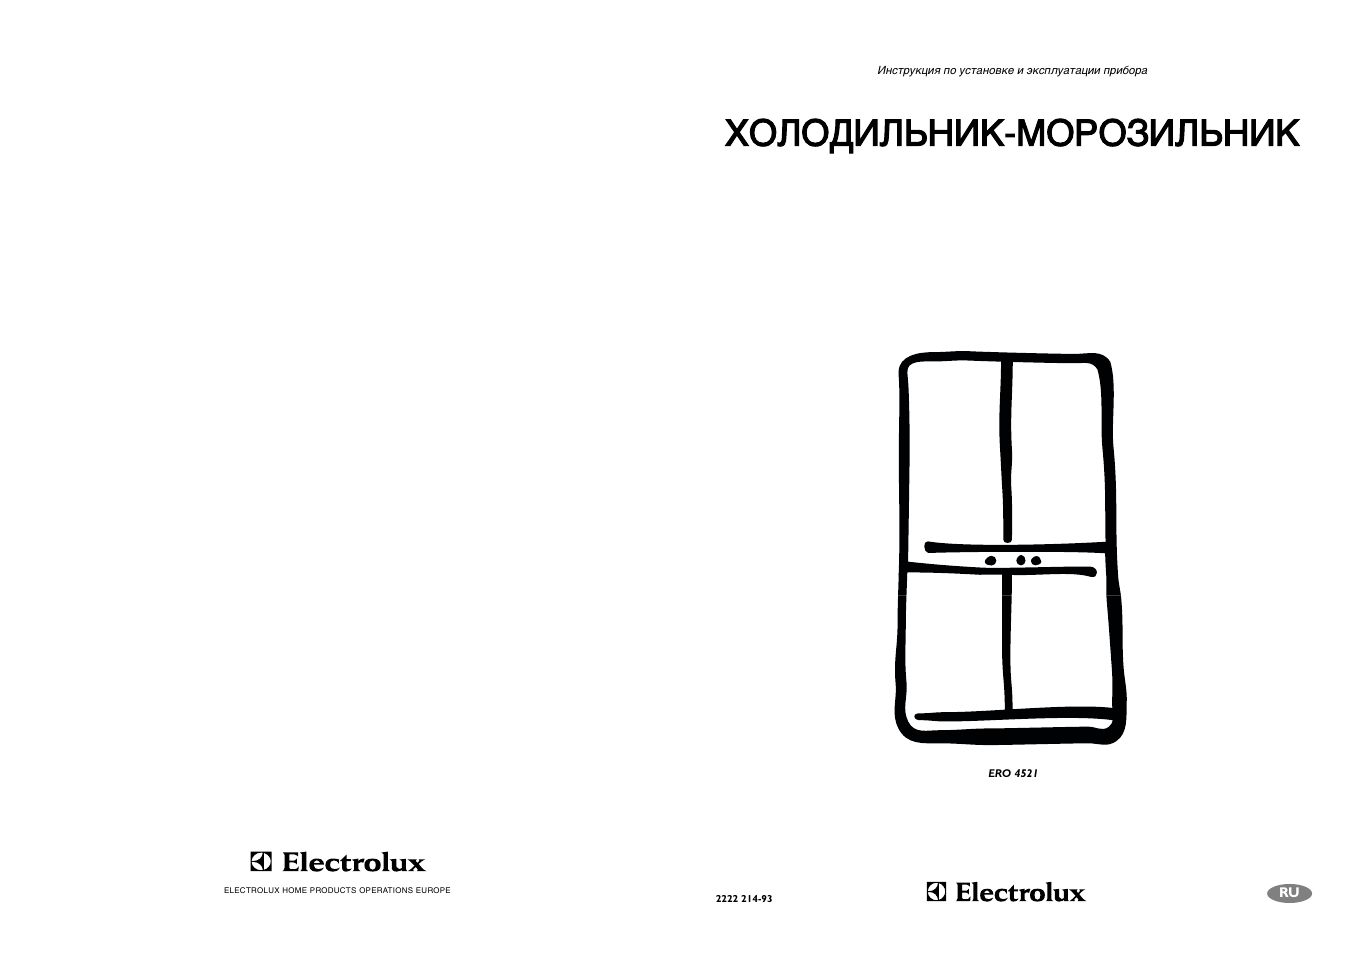 Холодильник Electrolux ero 4520